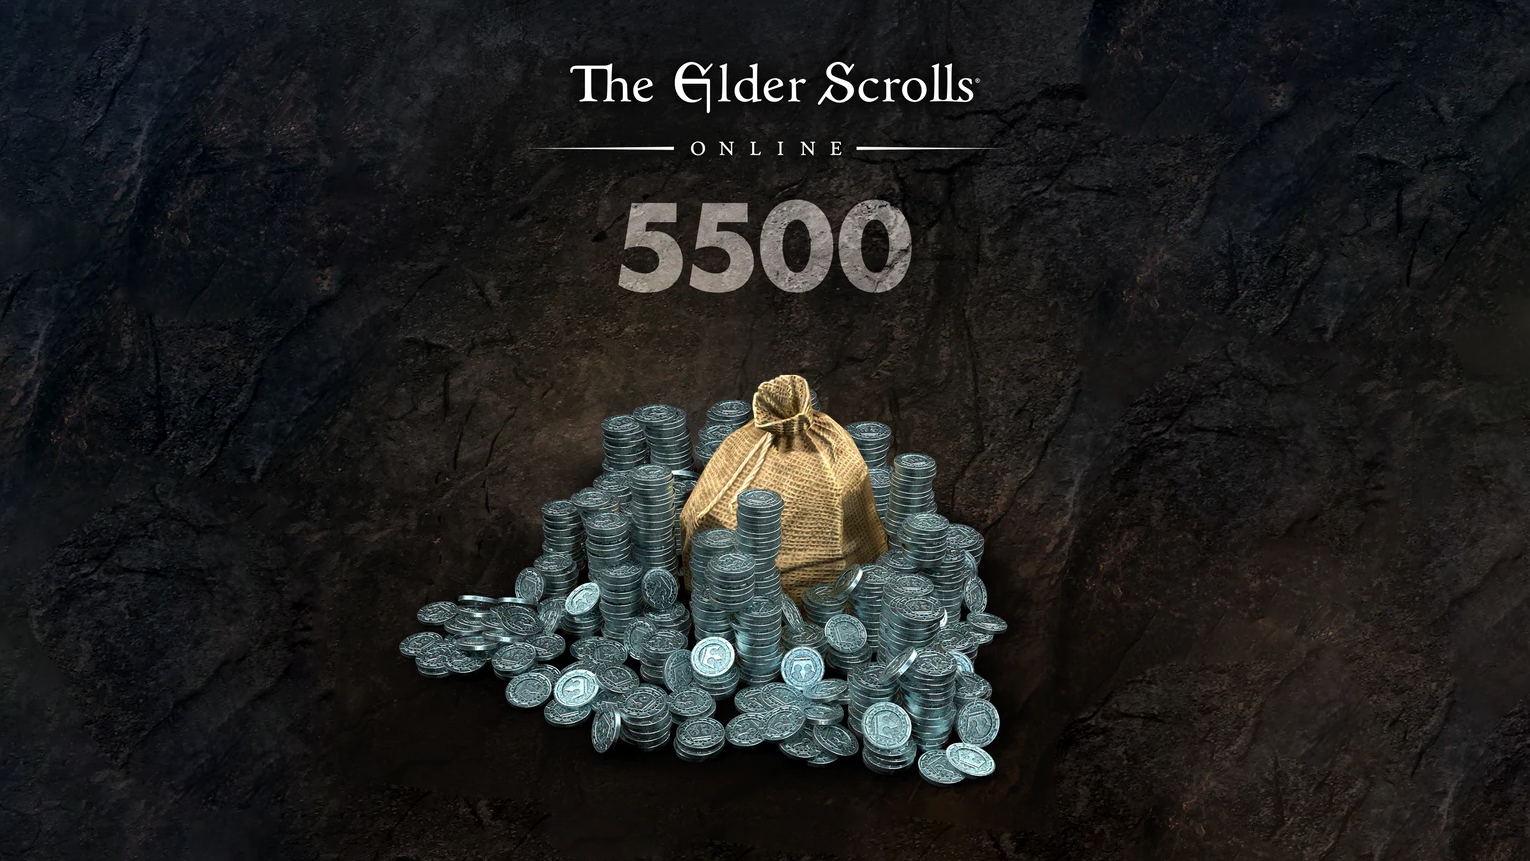 The Elder Scrolls Online: Tamriel Unlimited - 5500 Crowns XBOX One CD Key 35.02 usd